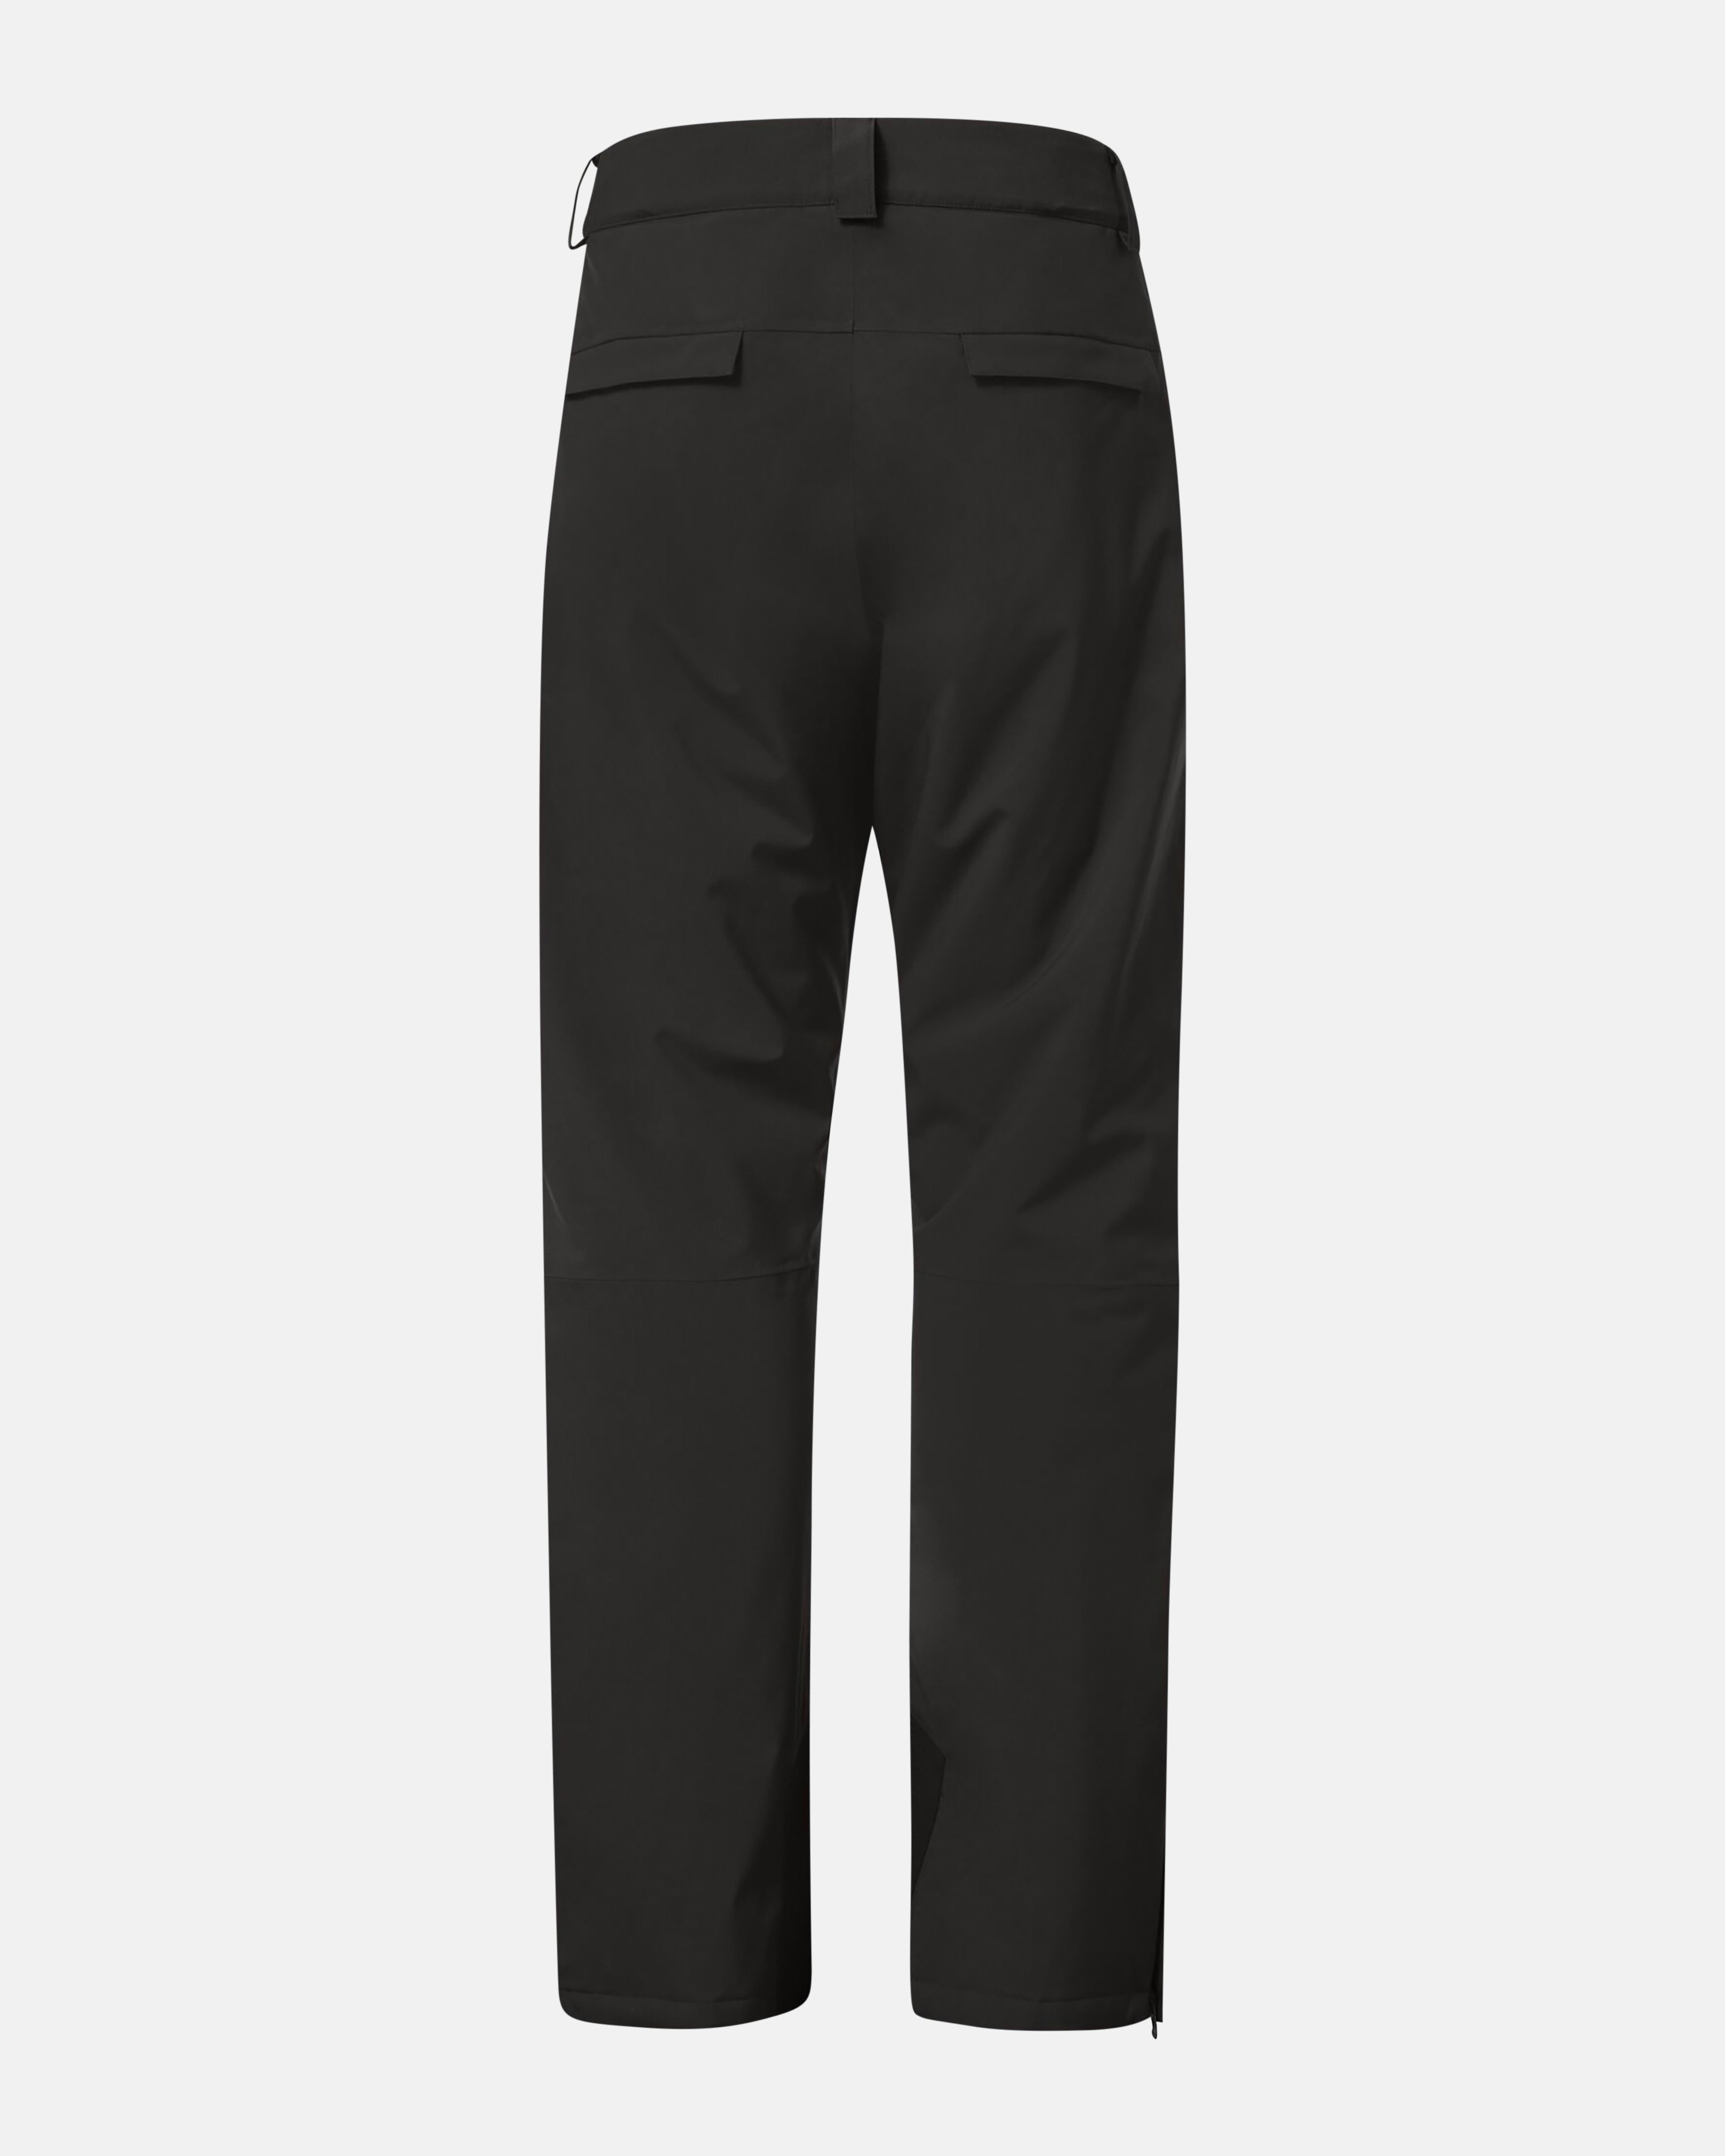 Oakley Snowboard Pant - Axis Insulated Black | Men | Junkyard